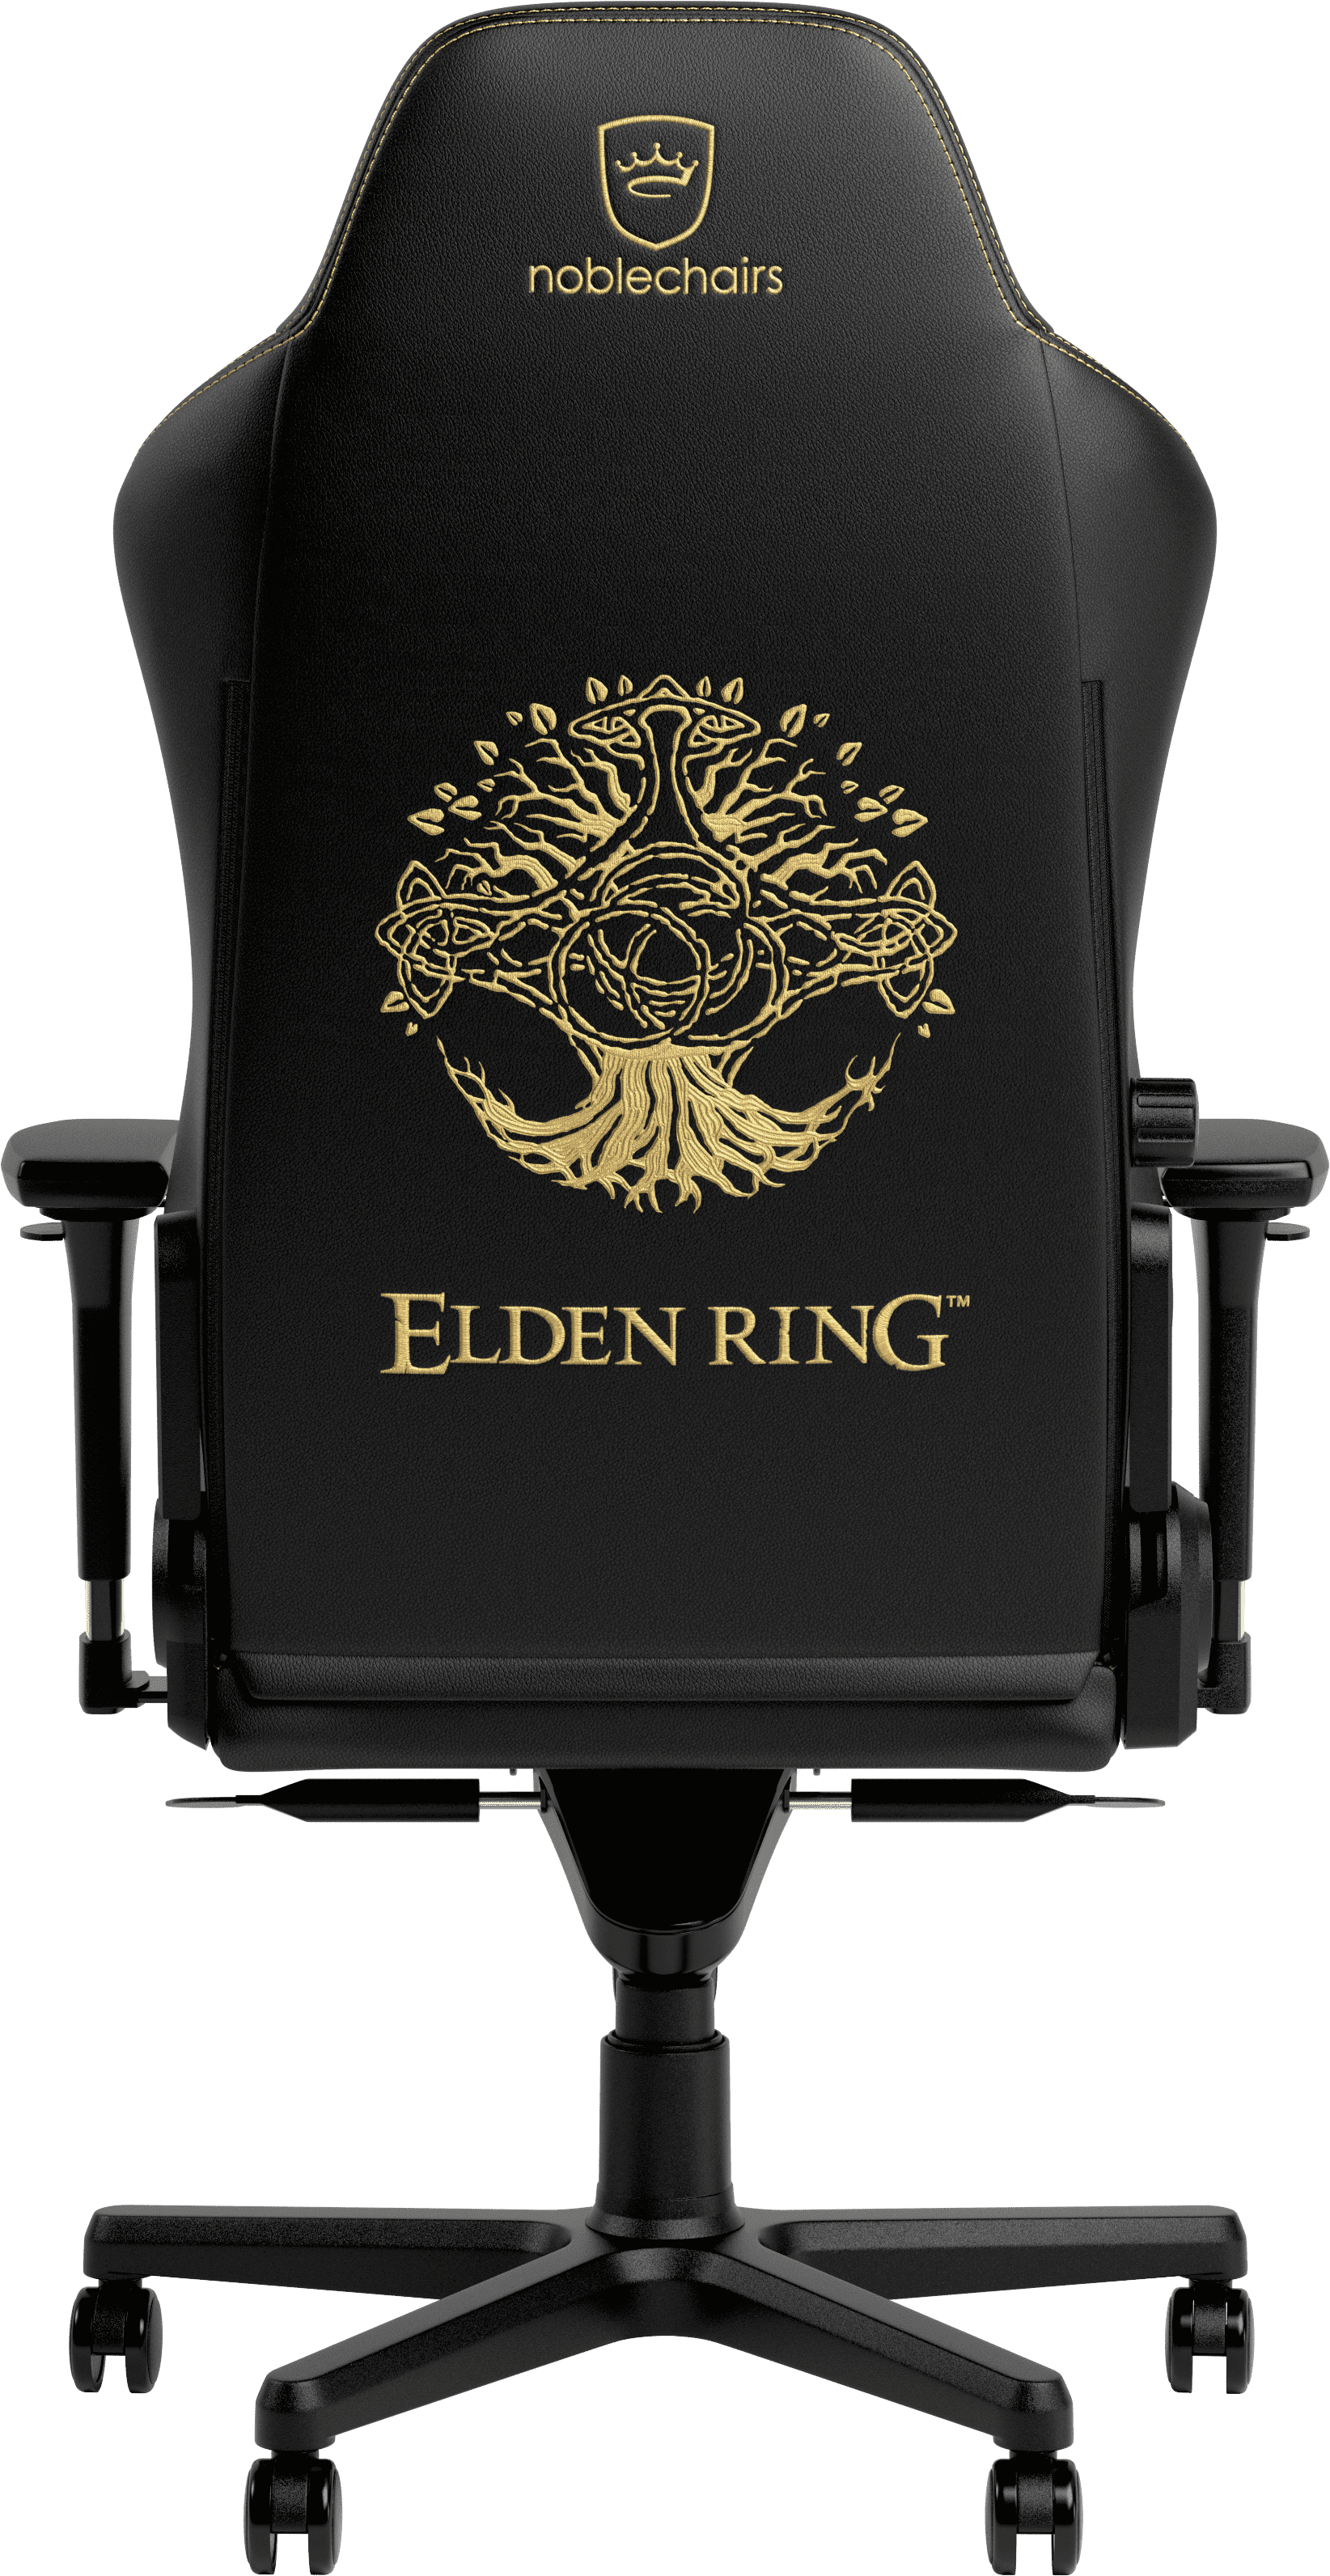 Intricate design noblechairs HERO Elden Ring Edition